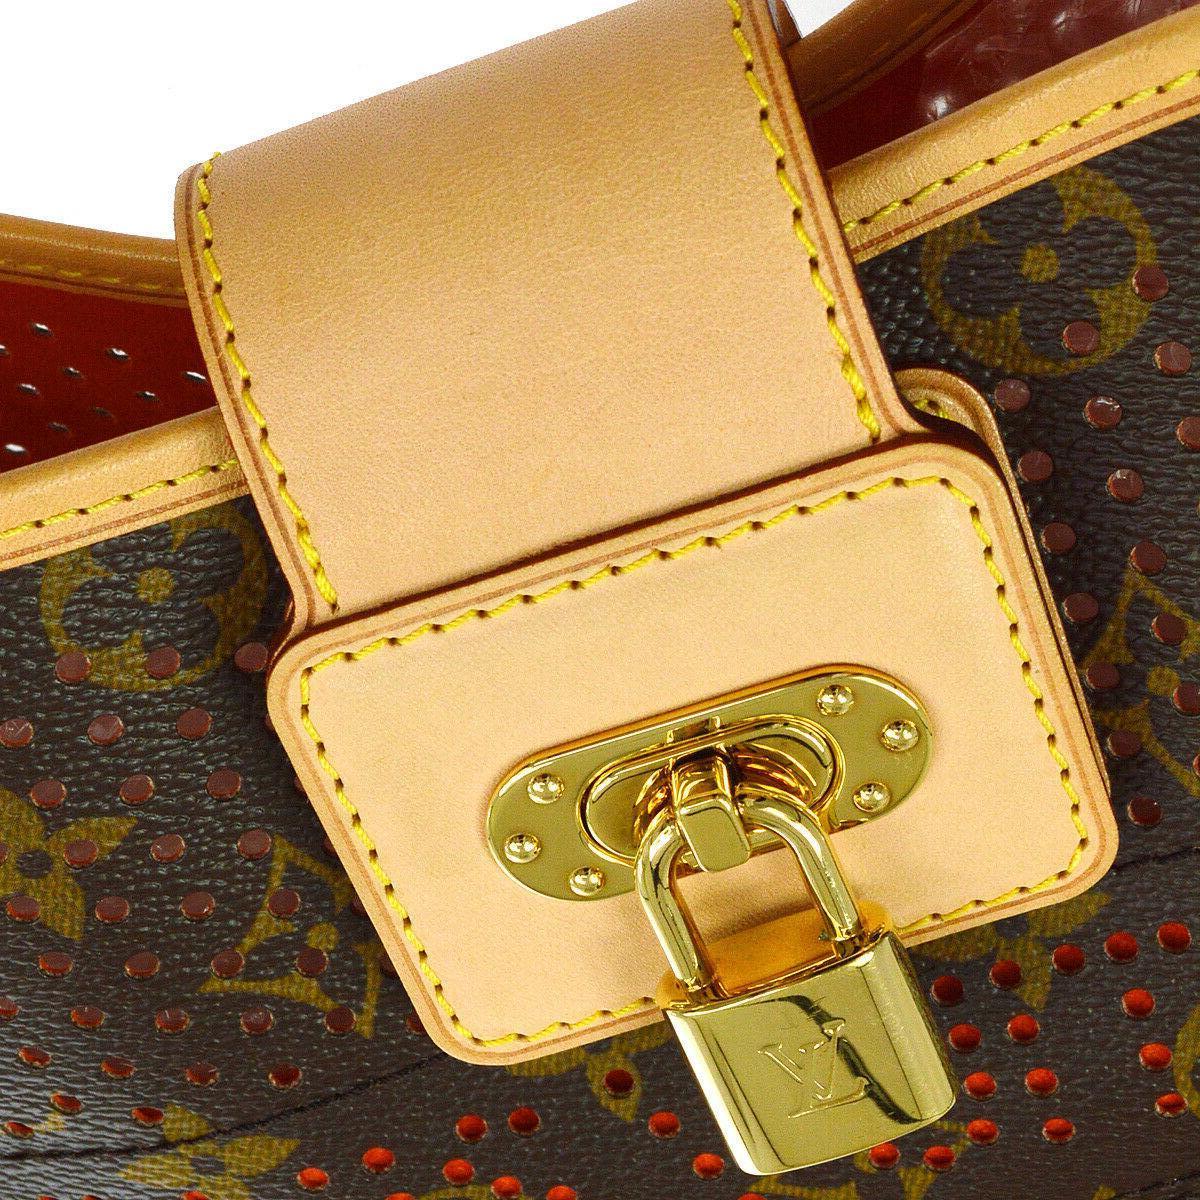 Louis Vuitton Limited Edition Monogram Top Handle Satchel Shoulder Bag in Box 

Monogram canvas
Leather 
Gold tone hardware
Date code present
Made in France
Shoulder strap drop 11-12.5